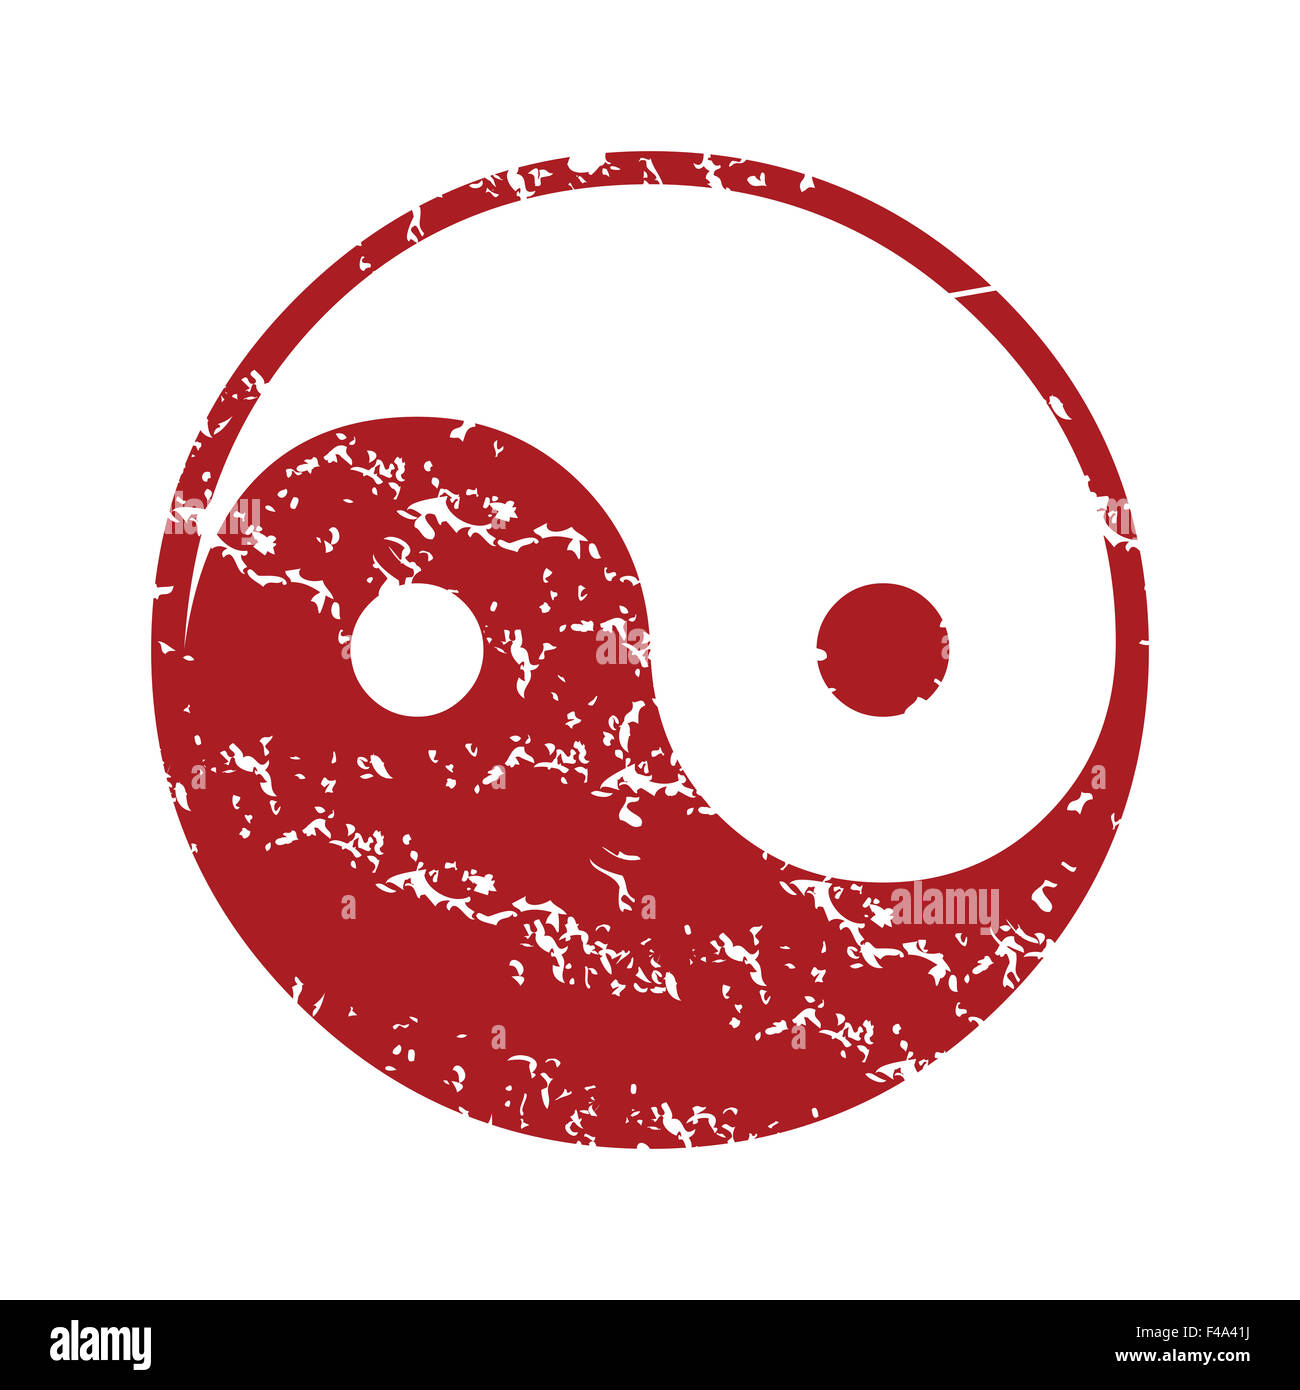 Red grunge Taoism logo Stock Photo